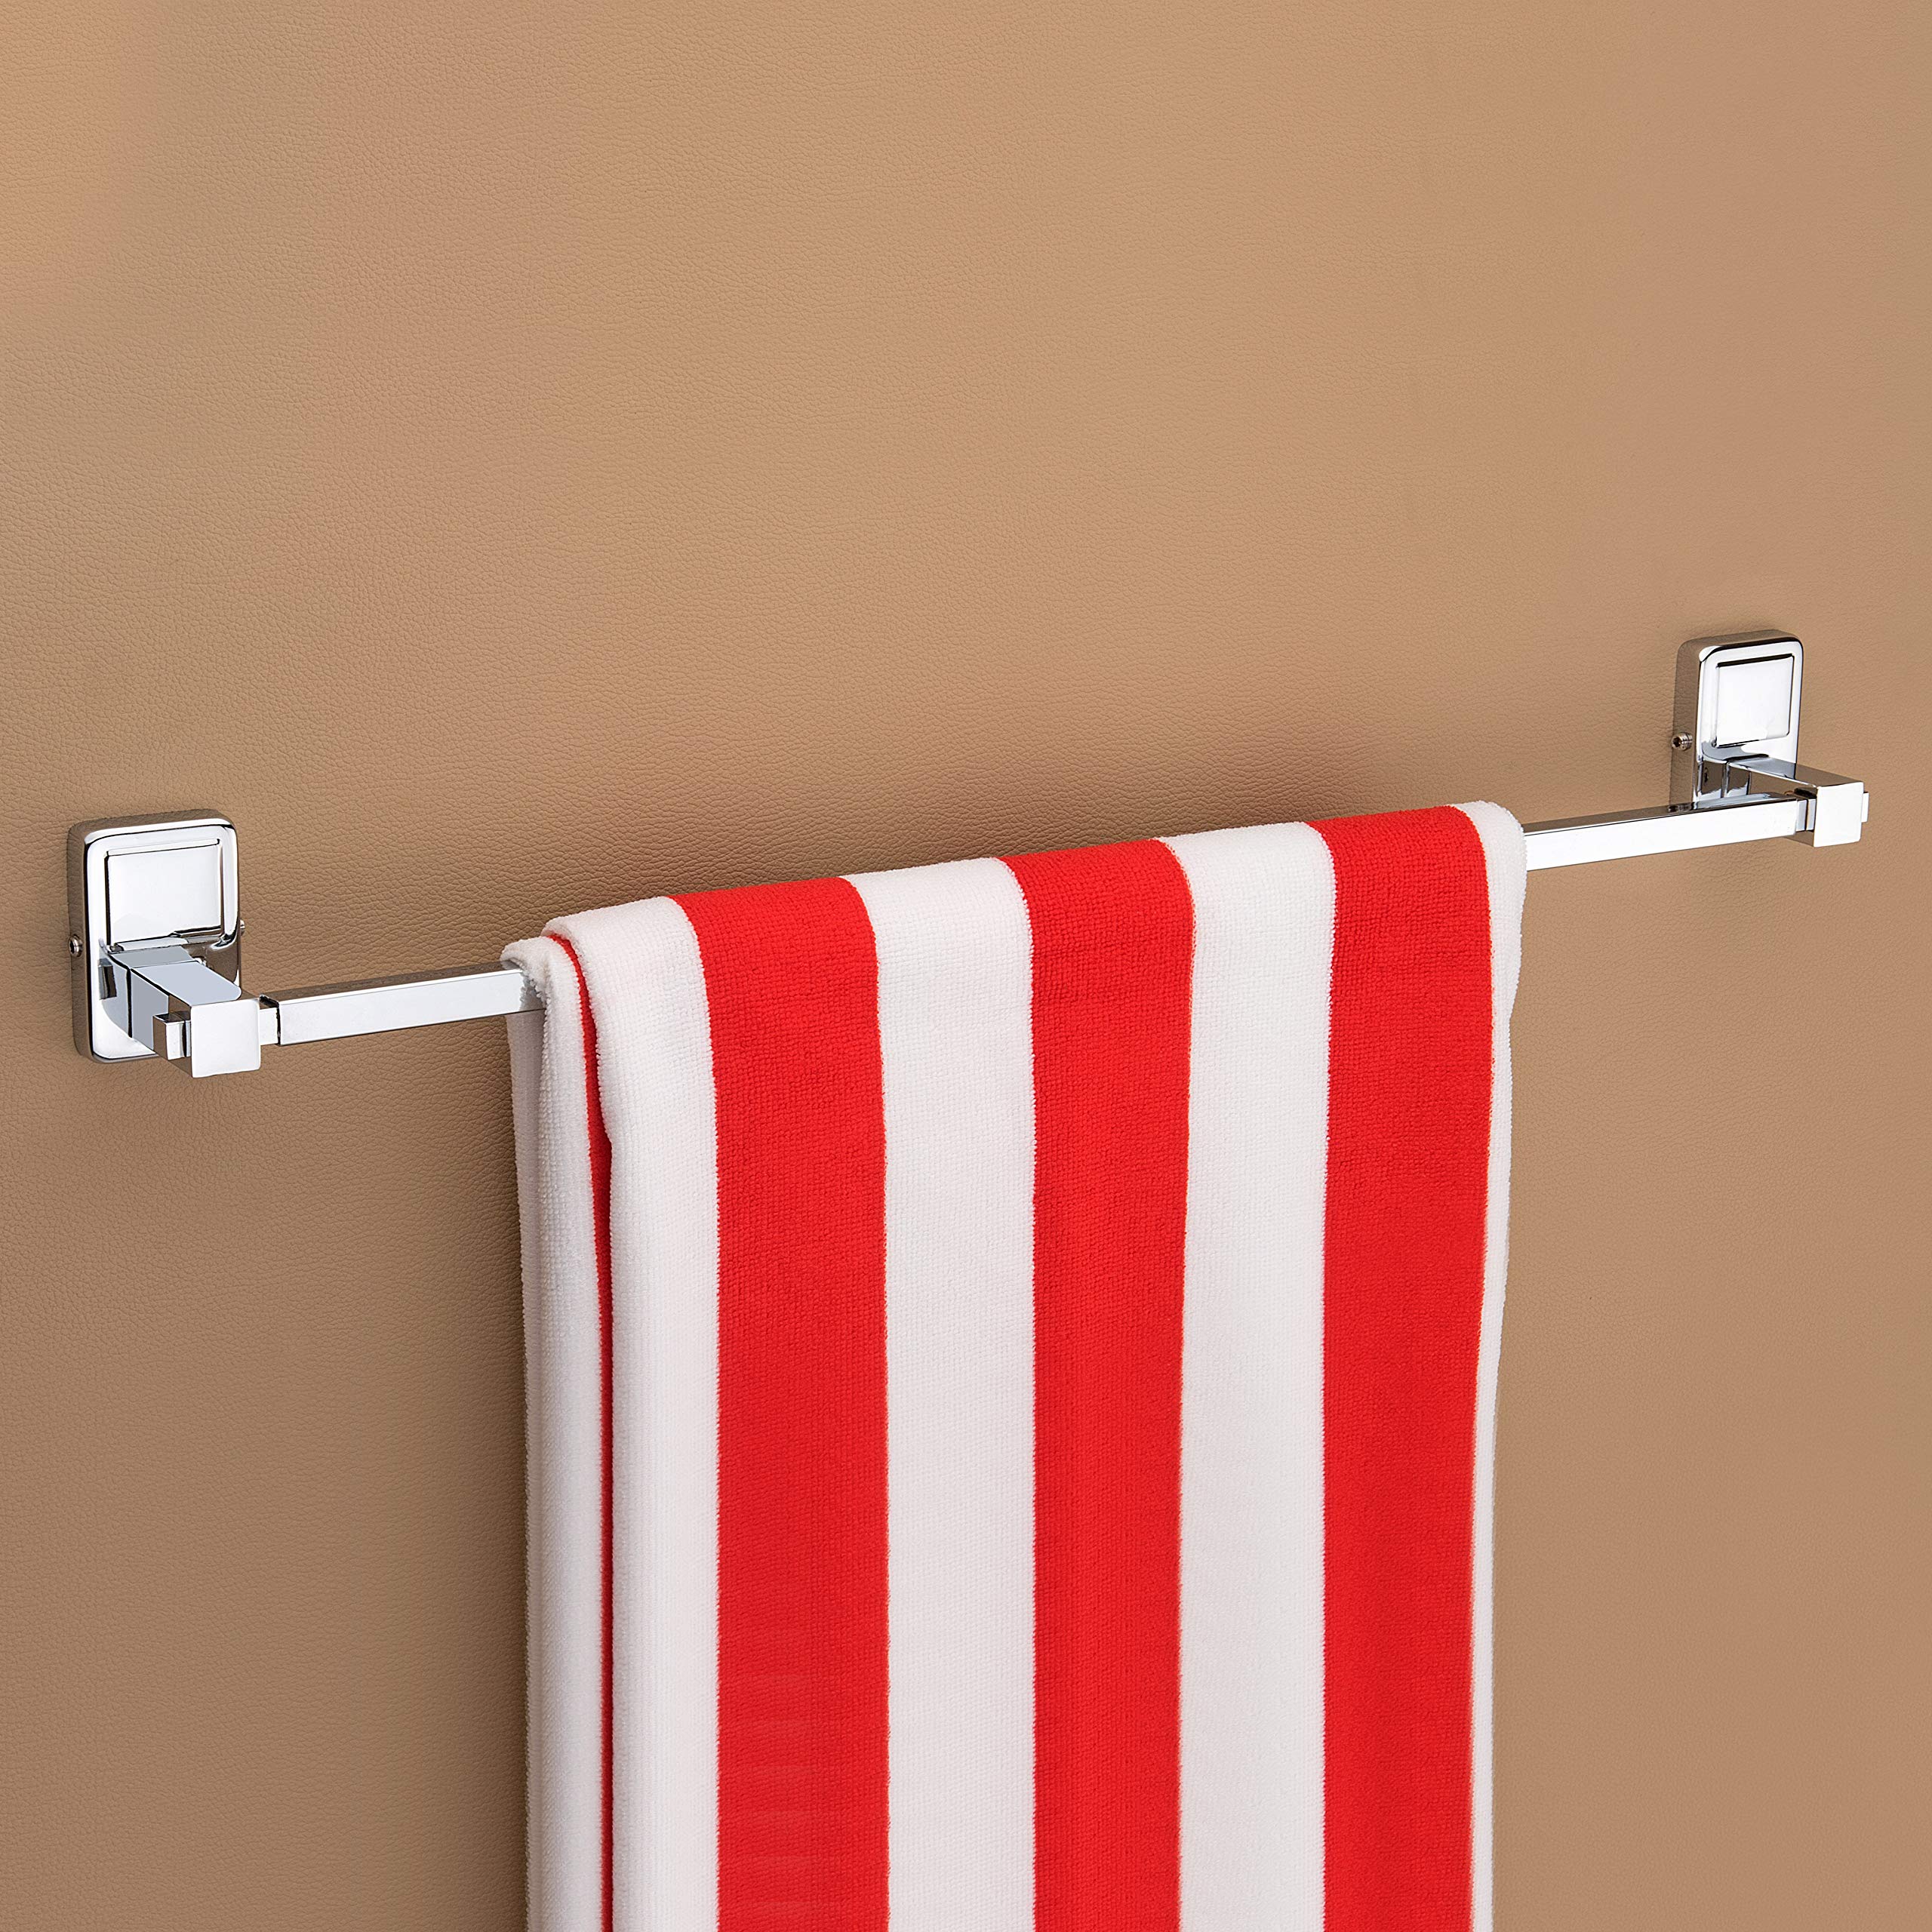 Plantex Stainless Steel 304 Grade Bathroom Accessories Set/Bathroom Hanger for Towel/Towel Bar/Napkin Ring/Tumbler Holder/Soap Dish/Robe Hook (Darcy - Pack of 5)